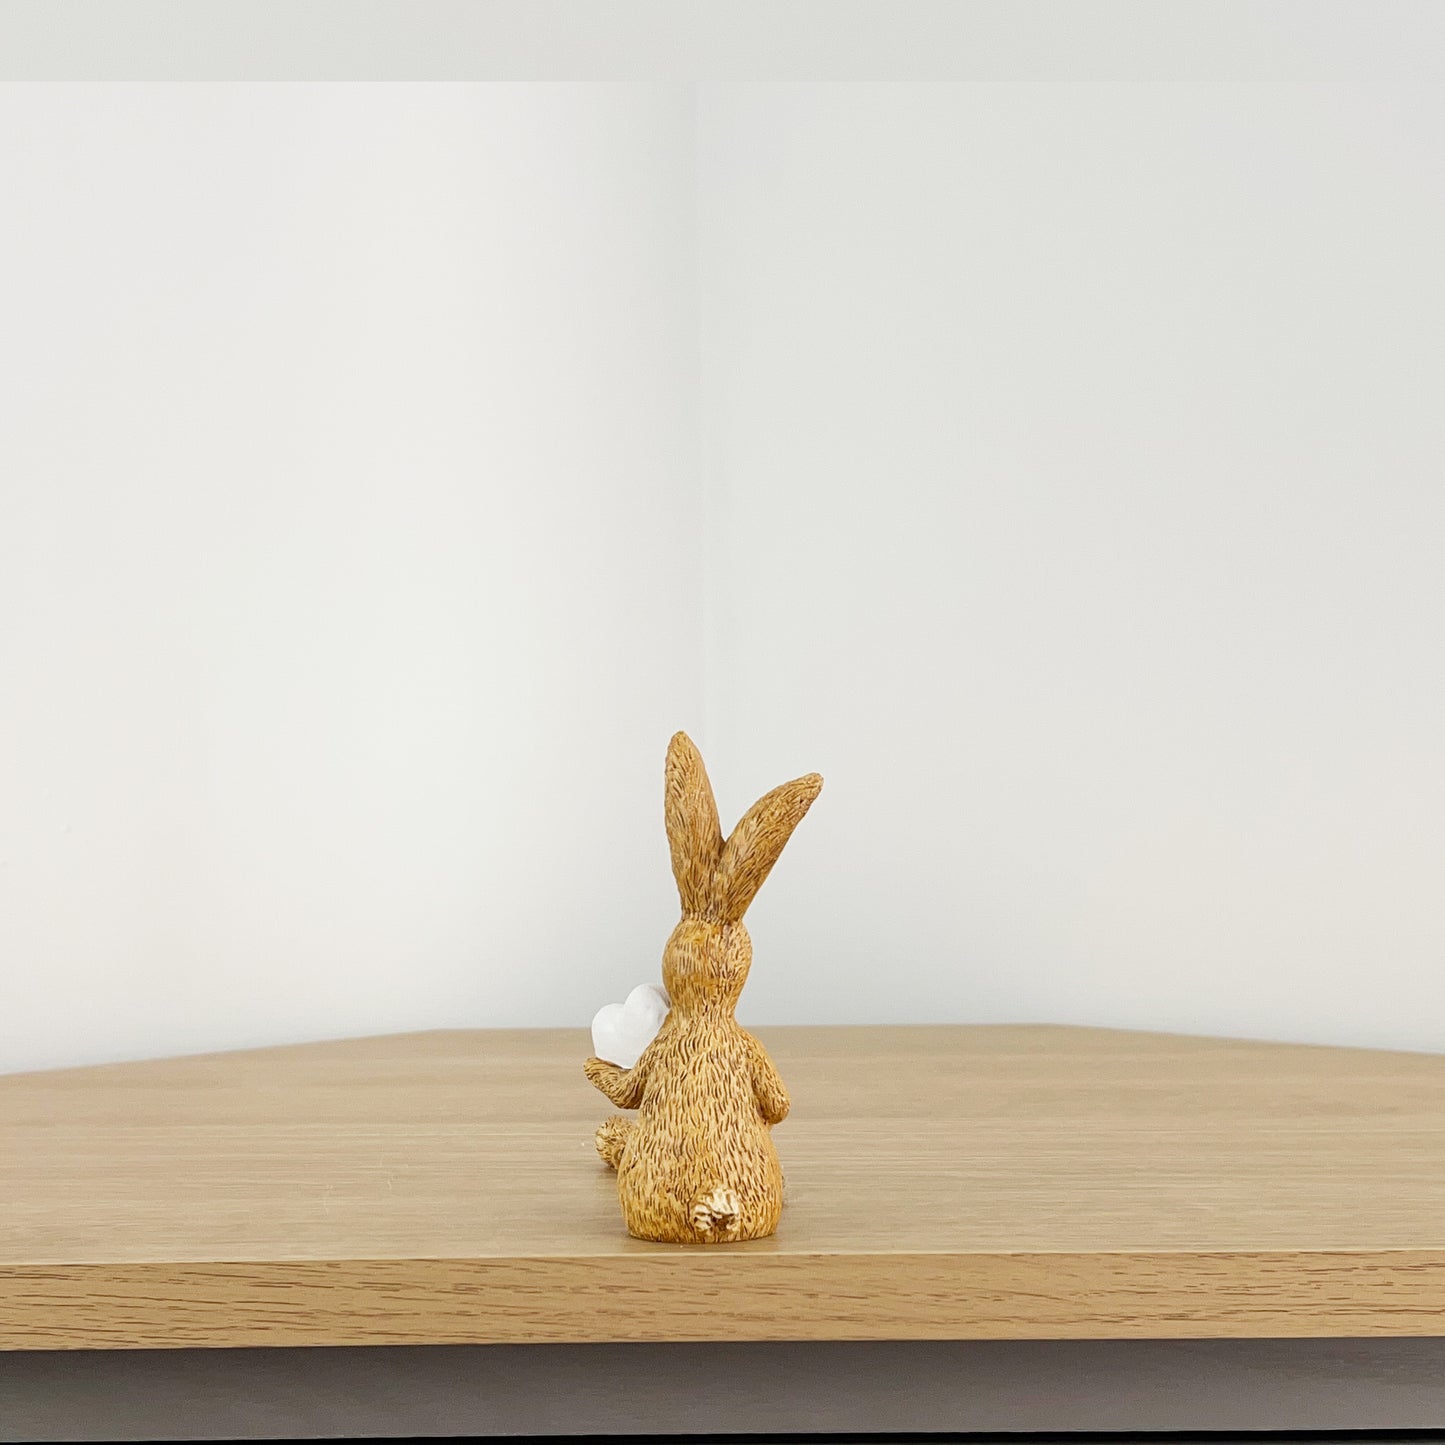 11cm Shelf Sitting Rabbit Ornament